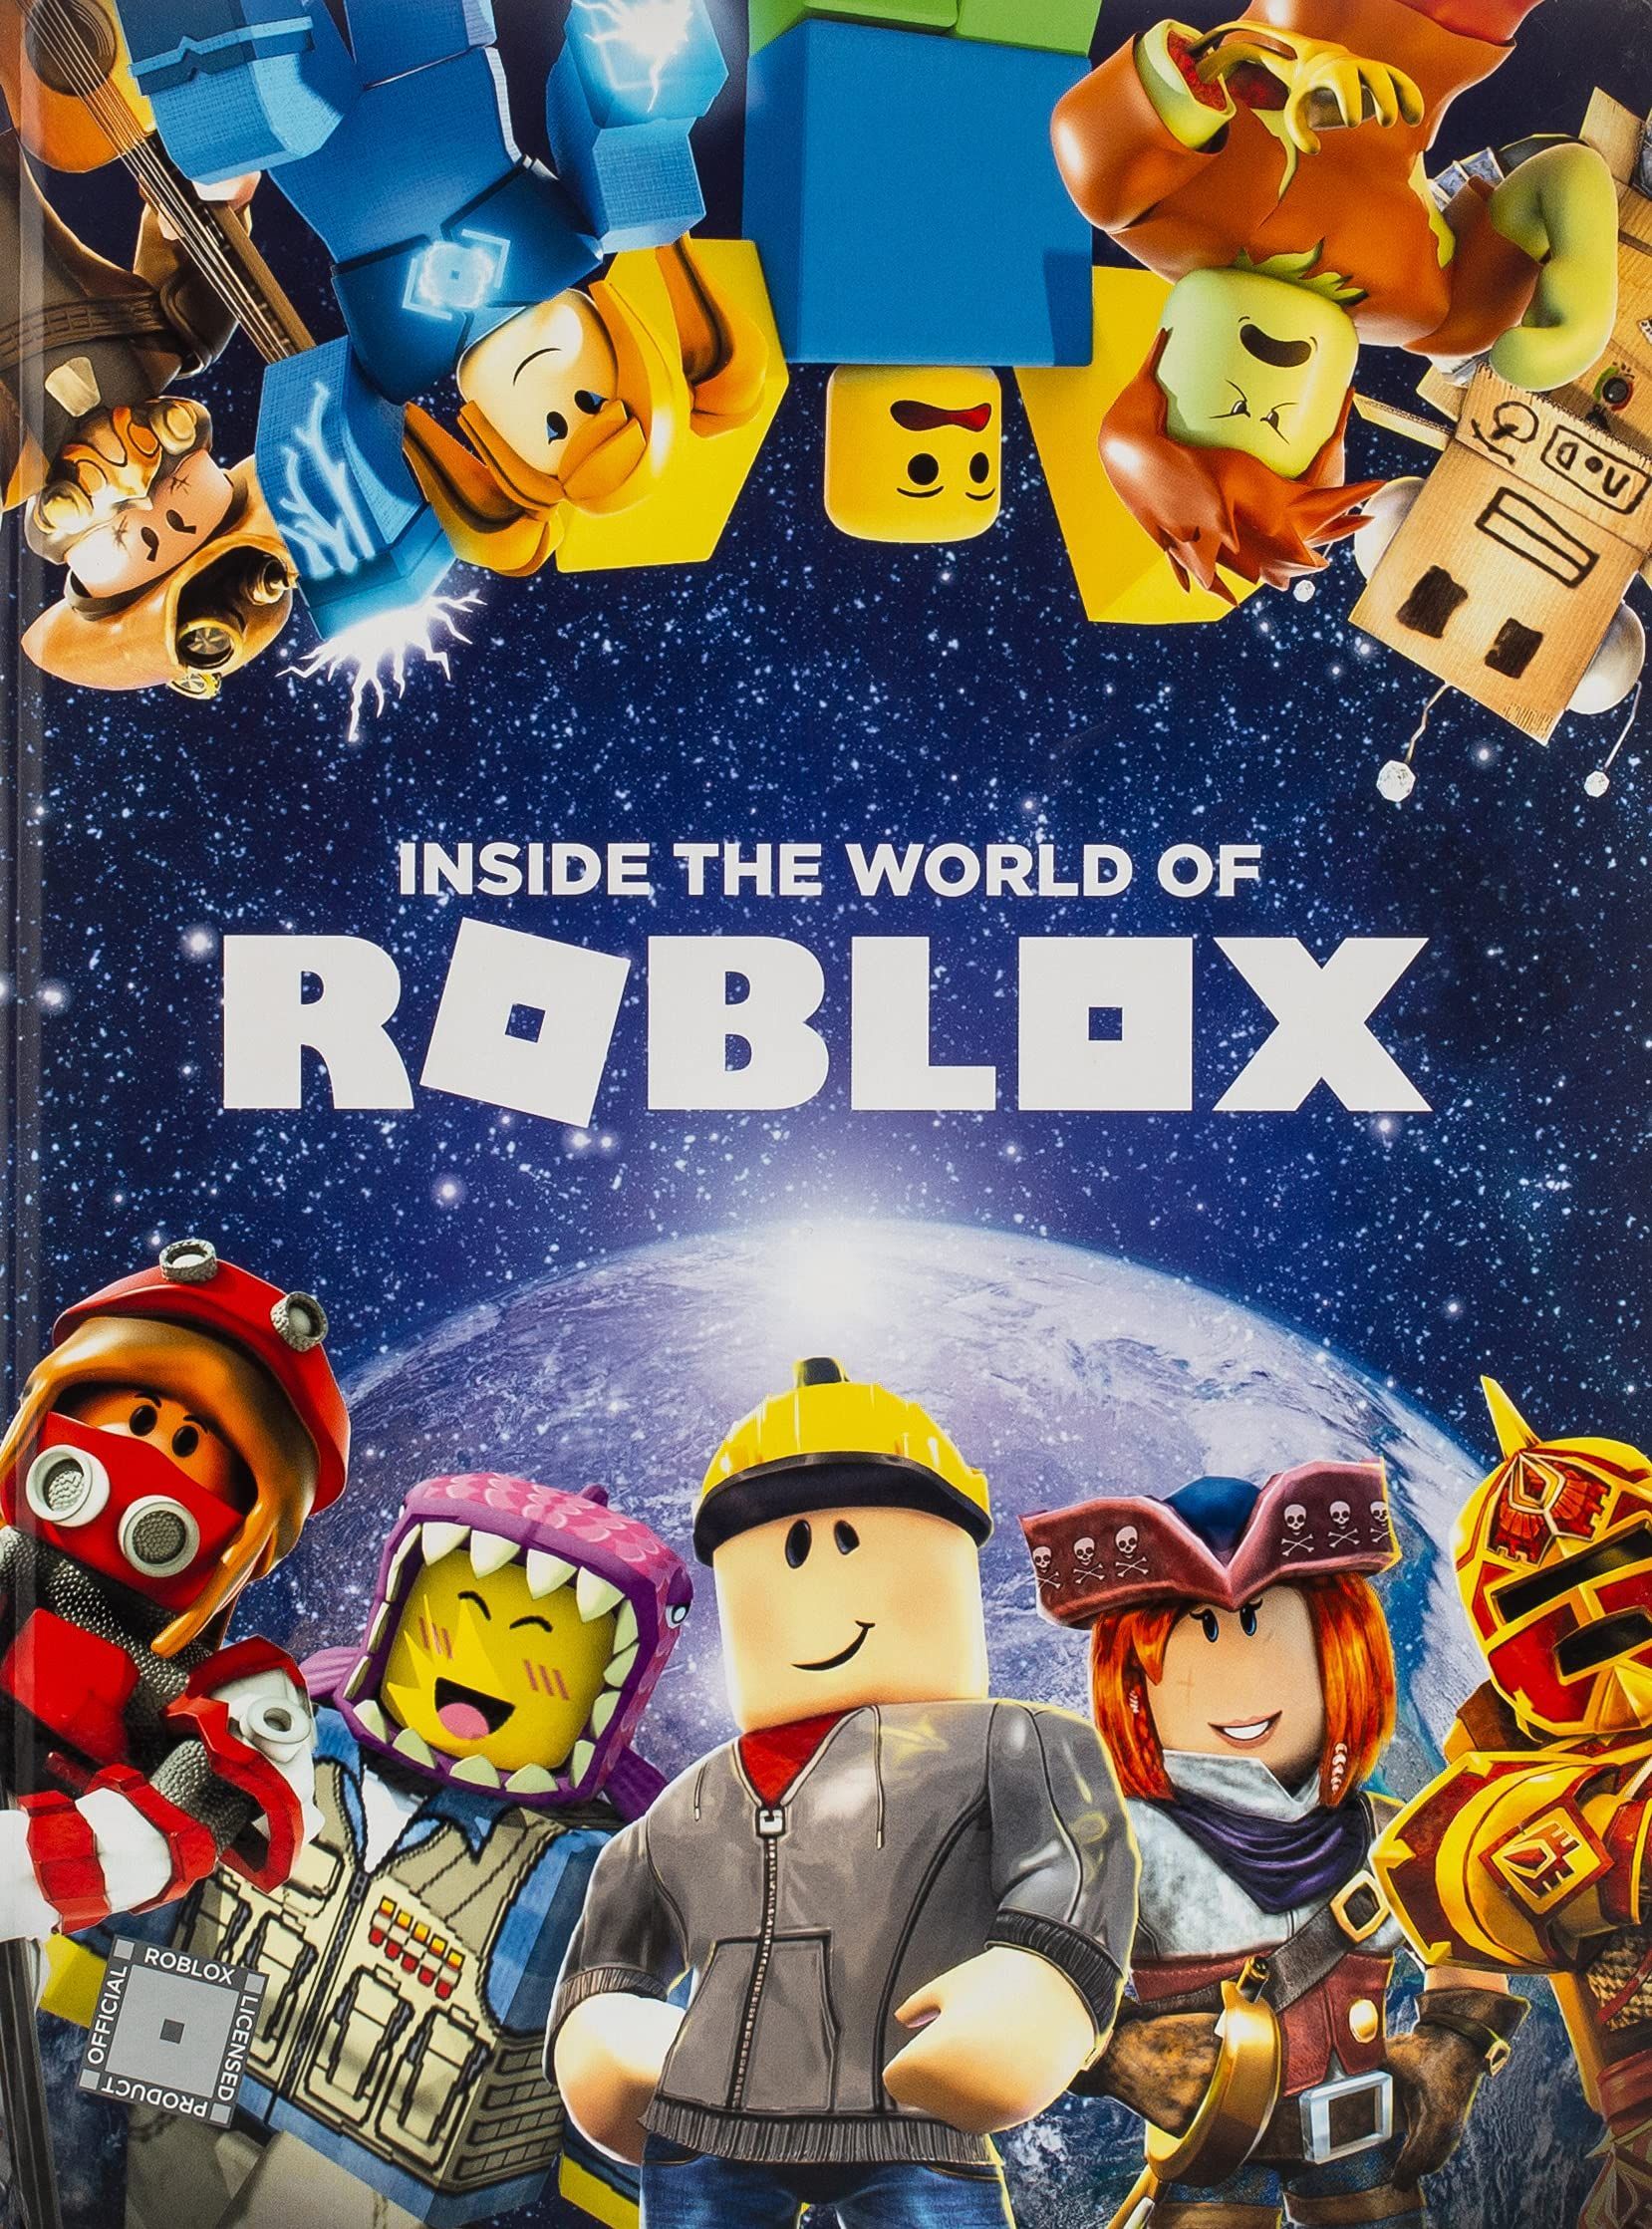 Everyone loves roblox!